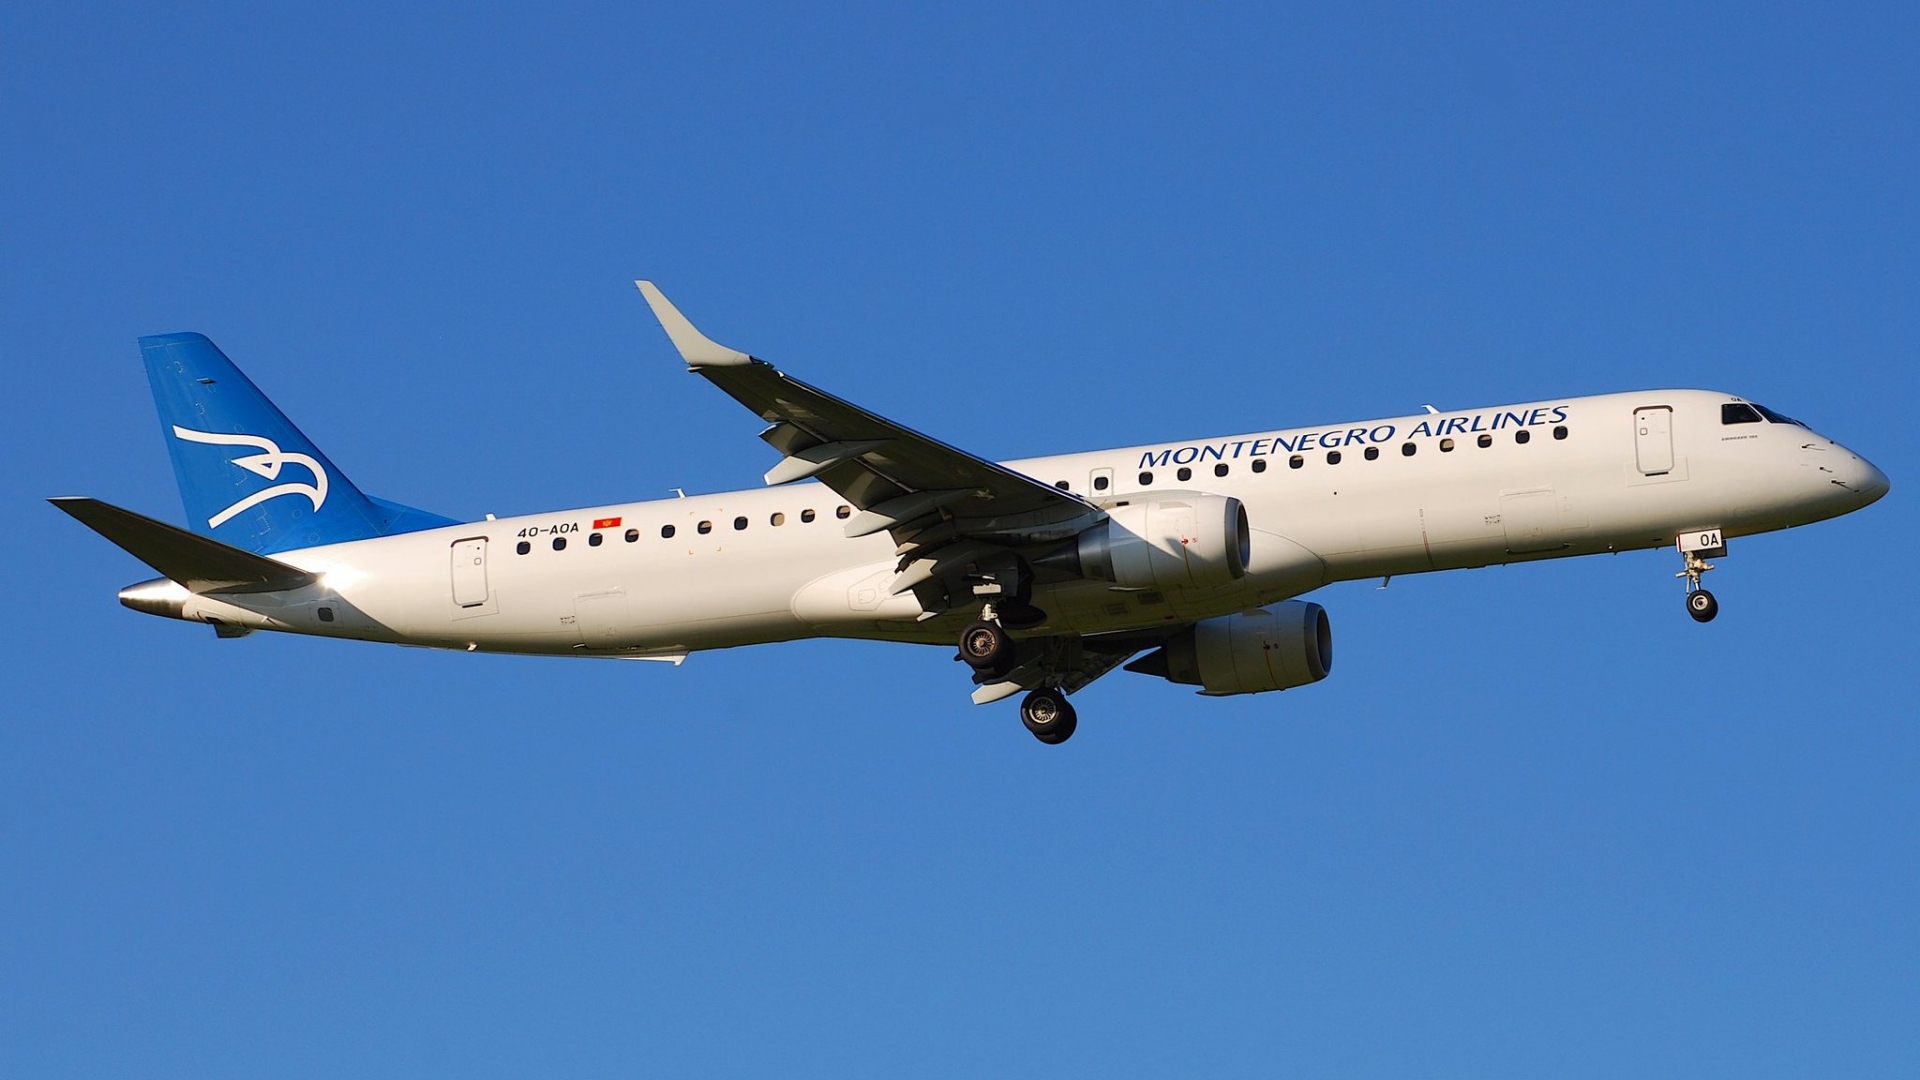 Авиакомпания Montenegro Airlines заявила о приостановке господдержки